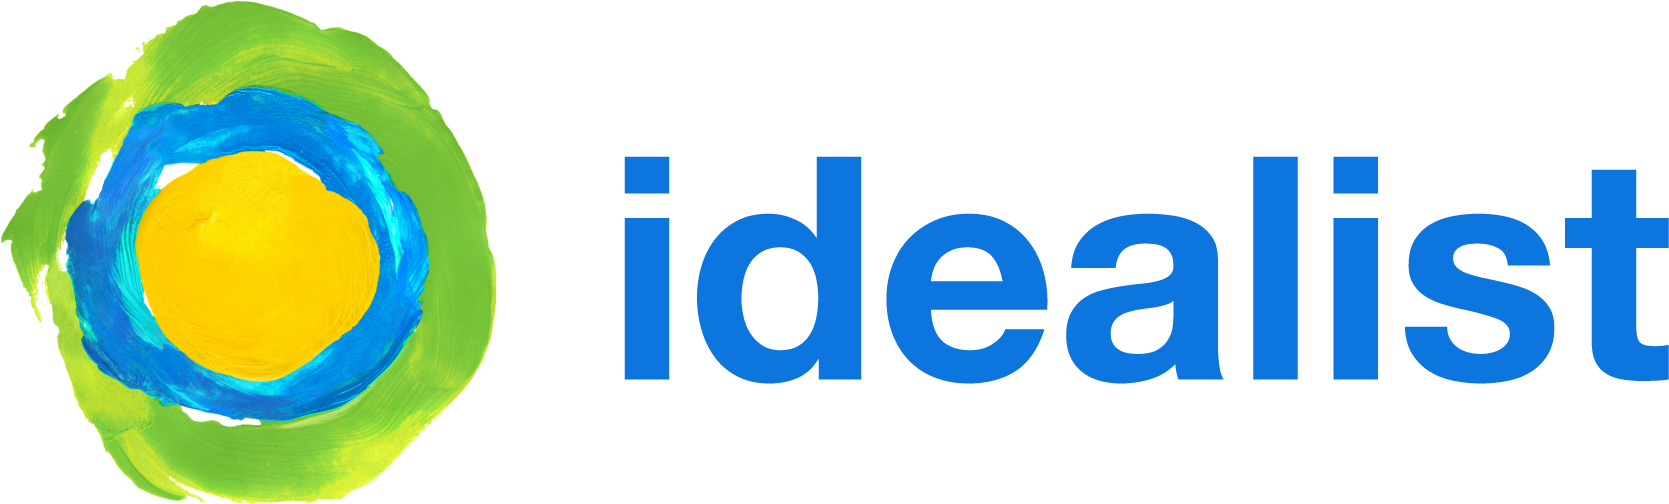 Paid job boards - Idealist transparent png logo